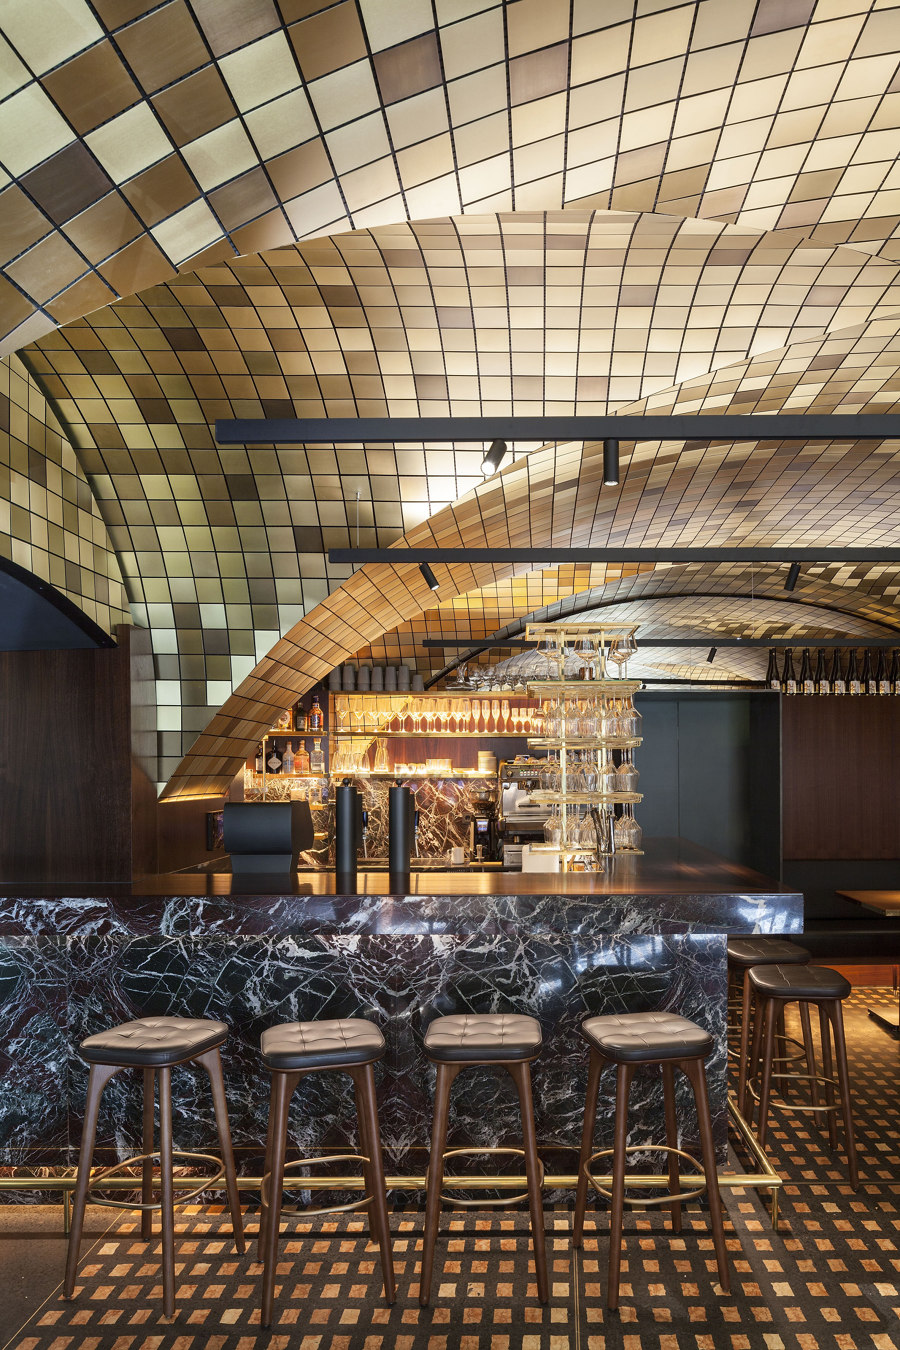 Koller + Koller am Waagplatz Restaurant | Restaurant interiors | BEHF Architects